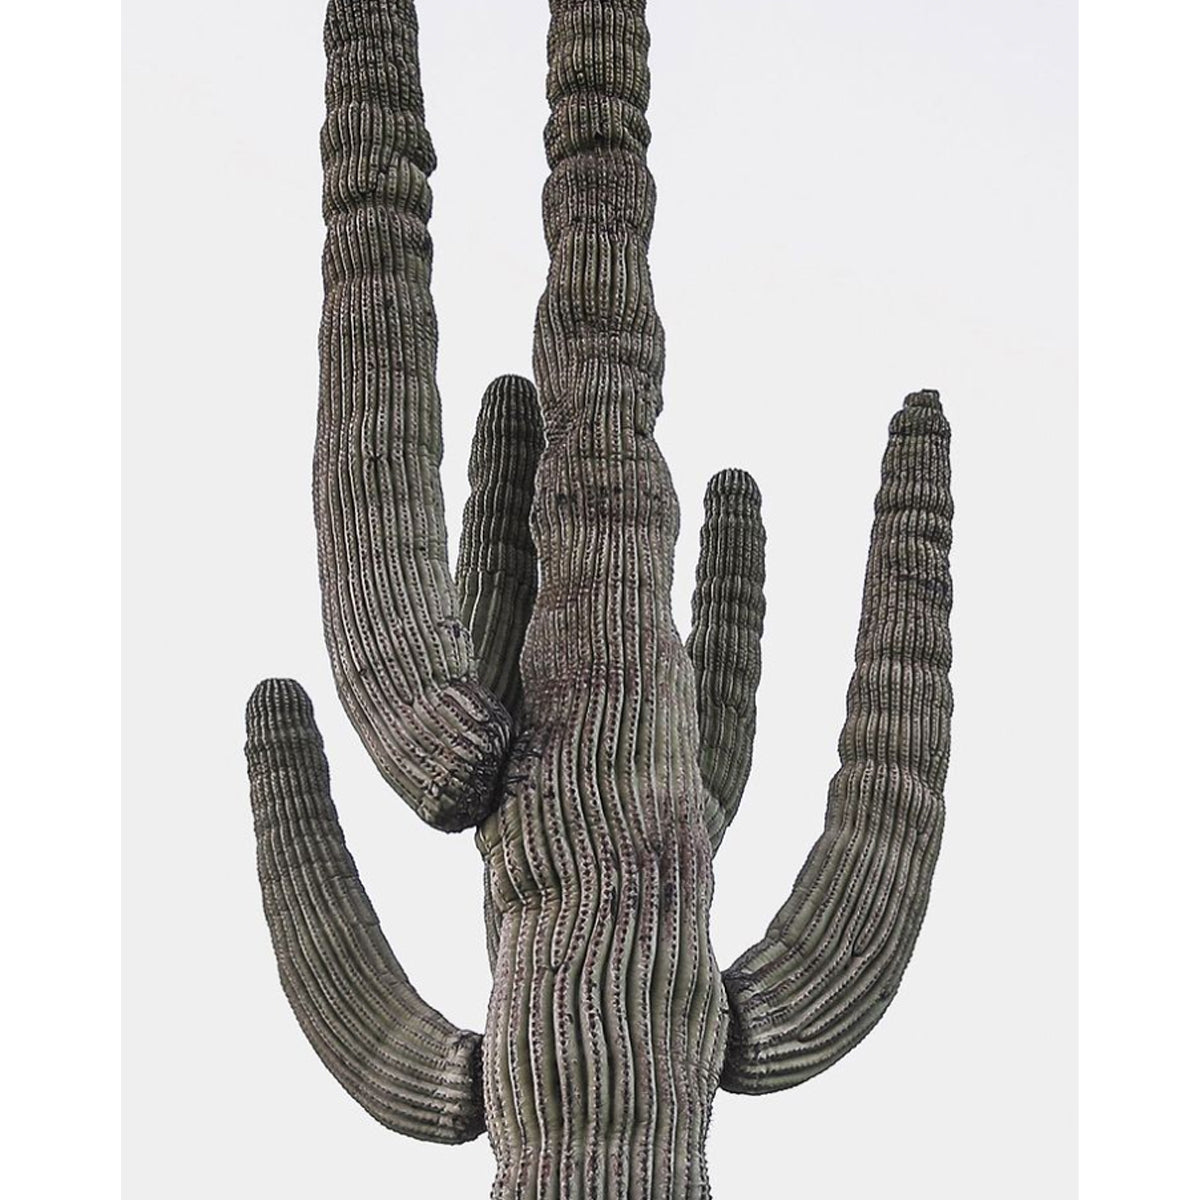 Duane Call - Saguaro Cactus